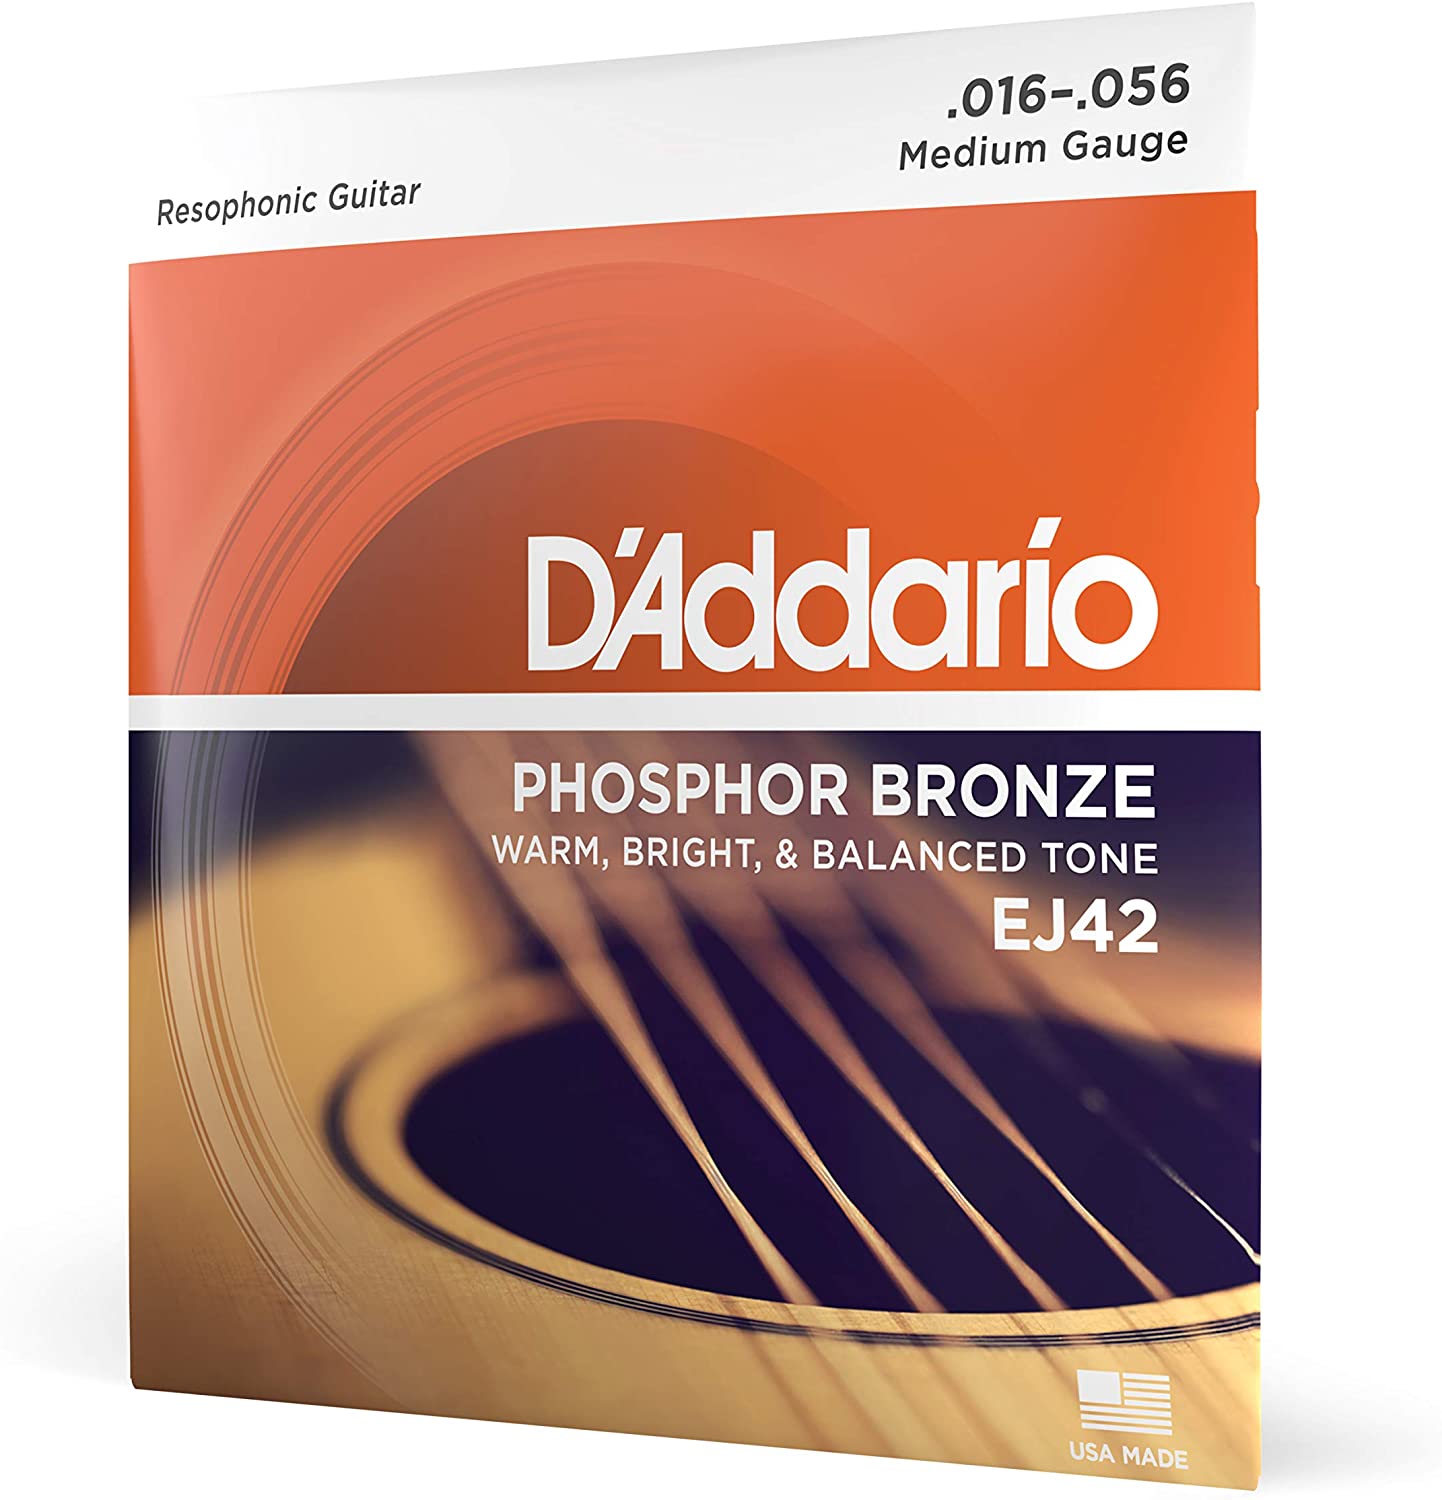 D'Addario's Resophonic Guitar Strings Medium Gauge